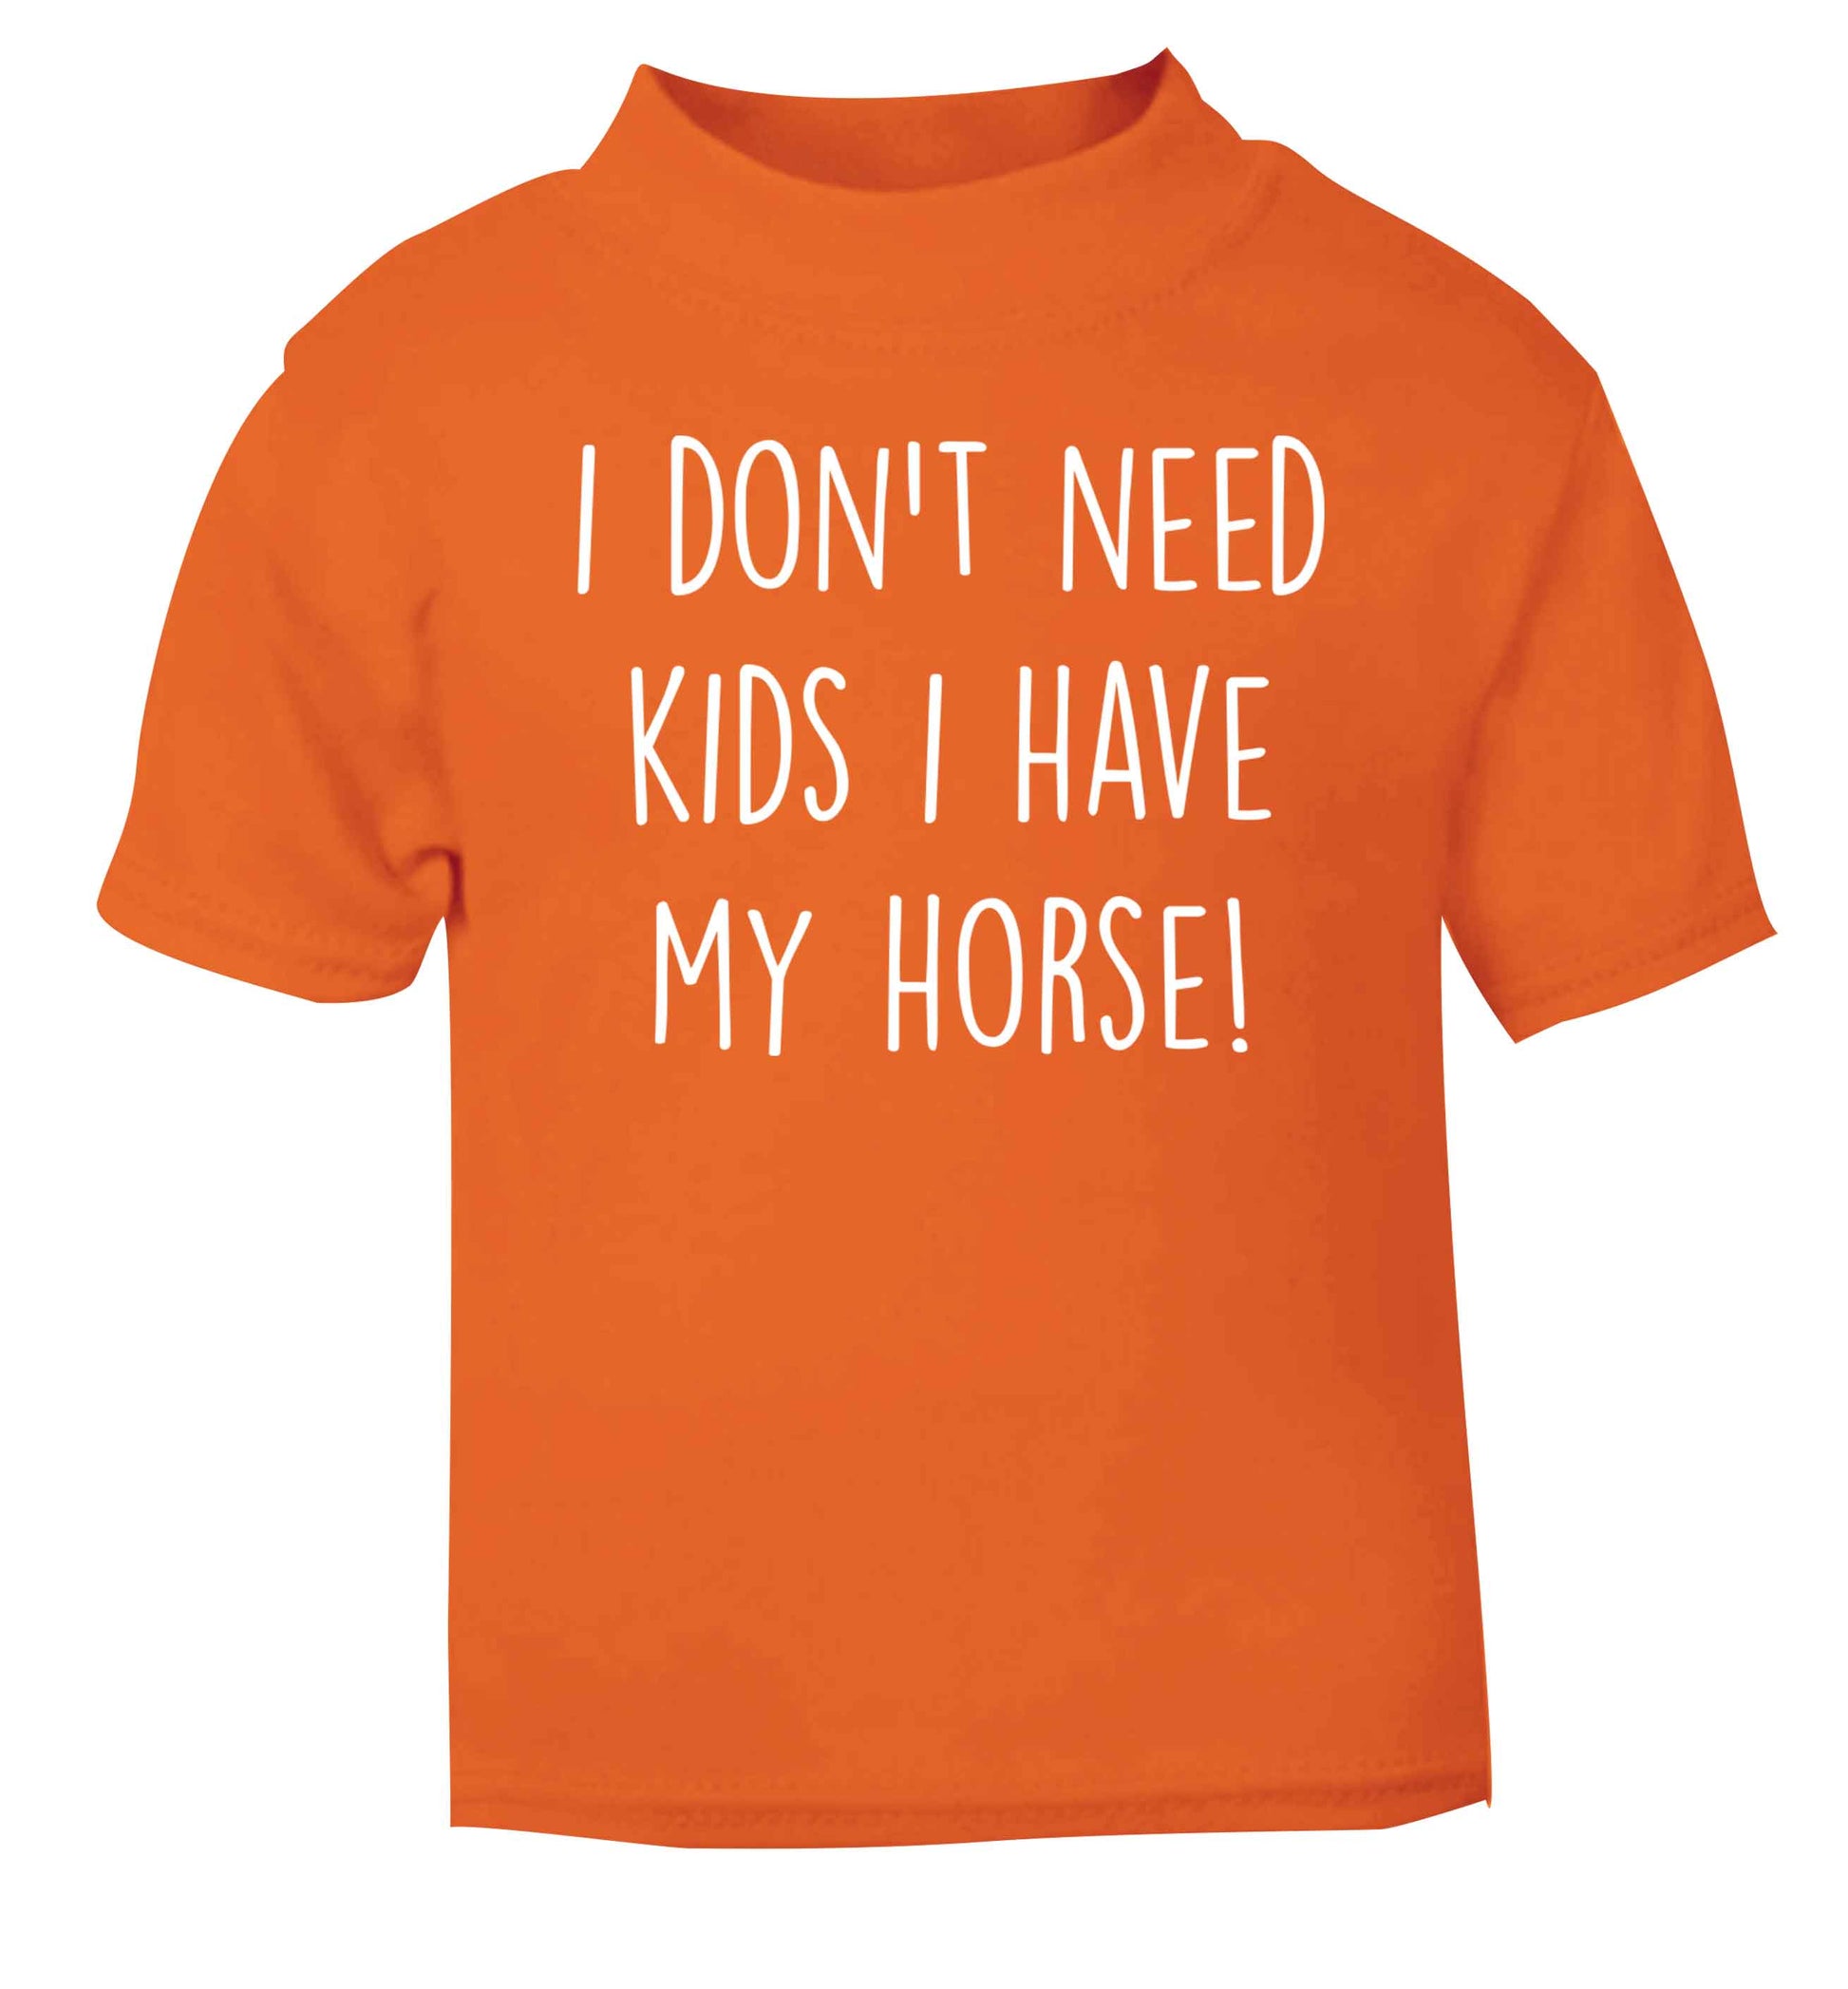 I don't need kids I have my horse orange baby toddler Tshirt 2 Years